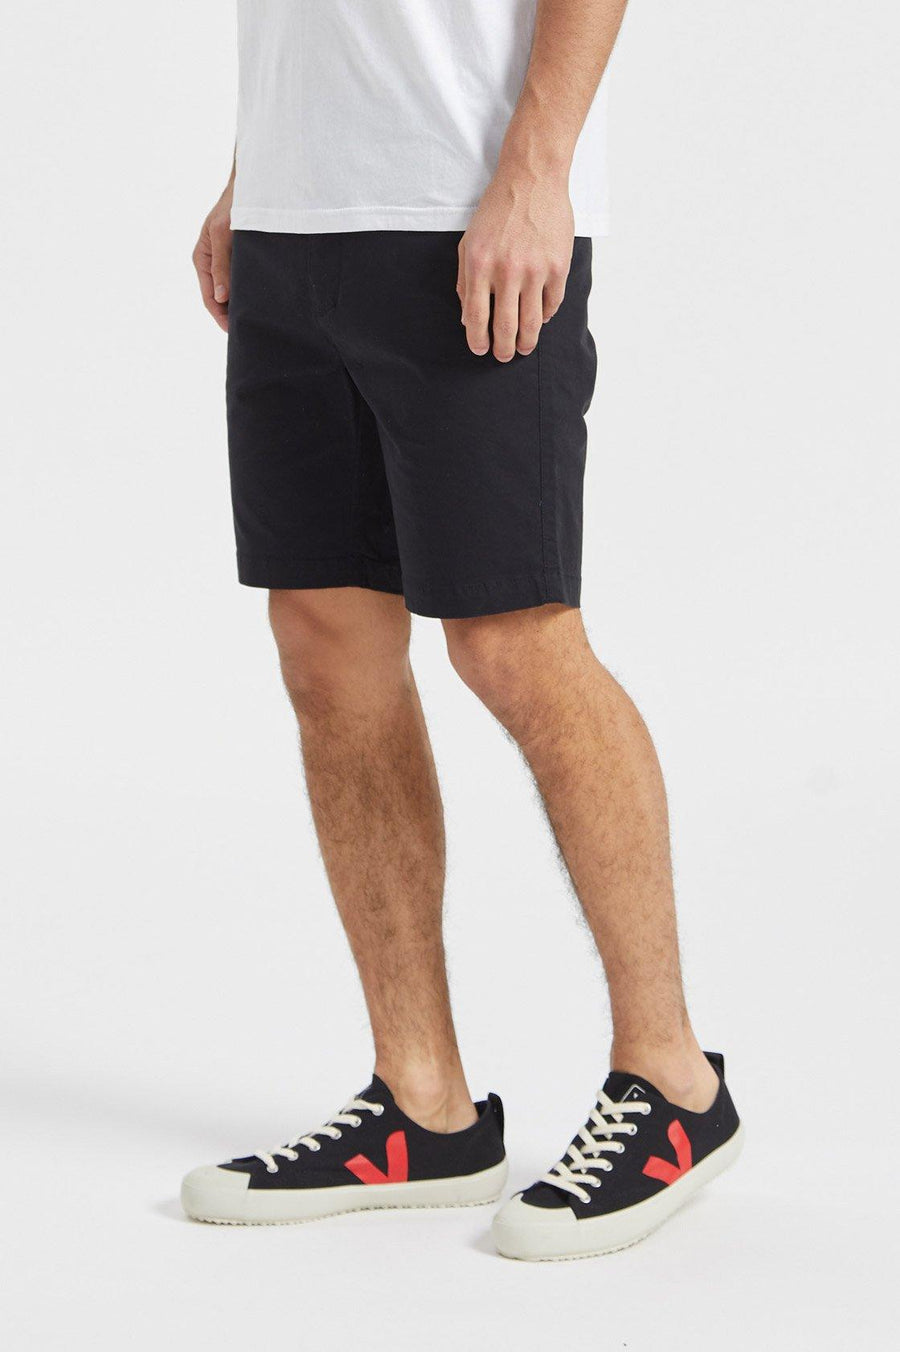 Wood Shorts Black - Dr Denim Jeans - Australia & NZ